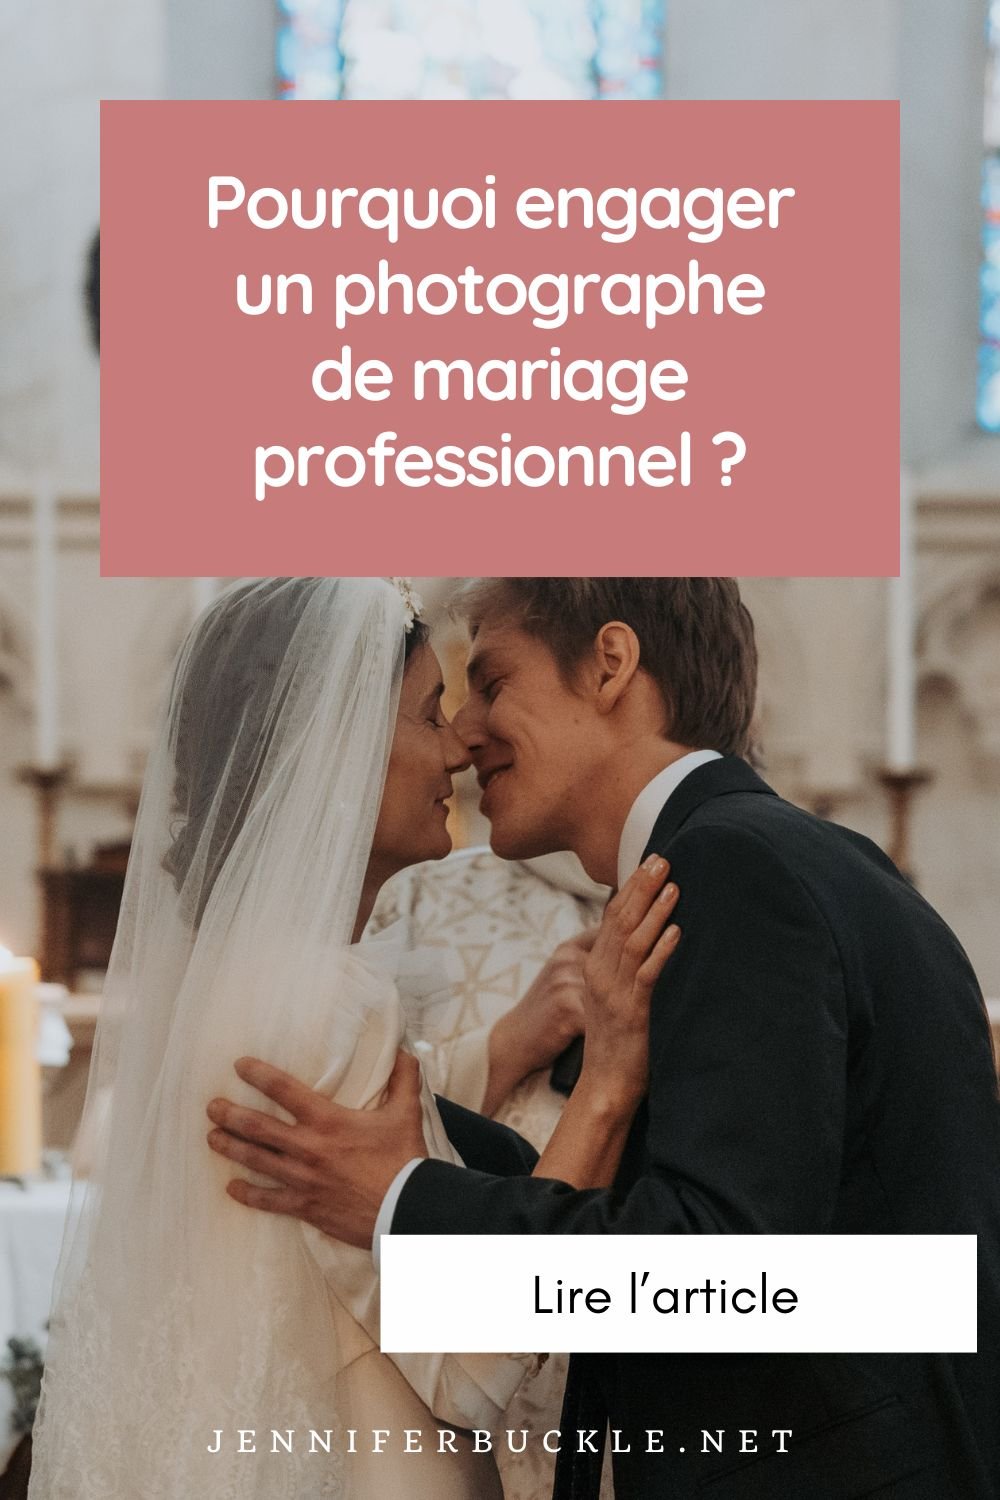 Jennifer Buckle photographe mariage professionnel pourquoi engager un photographe mariage professionnel 1.jpg